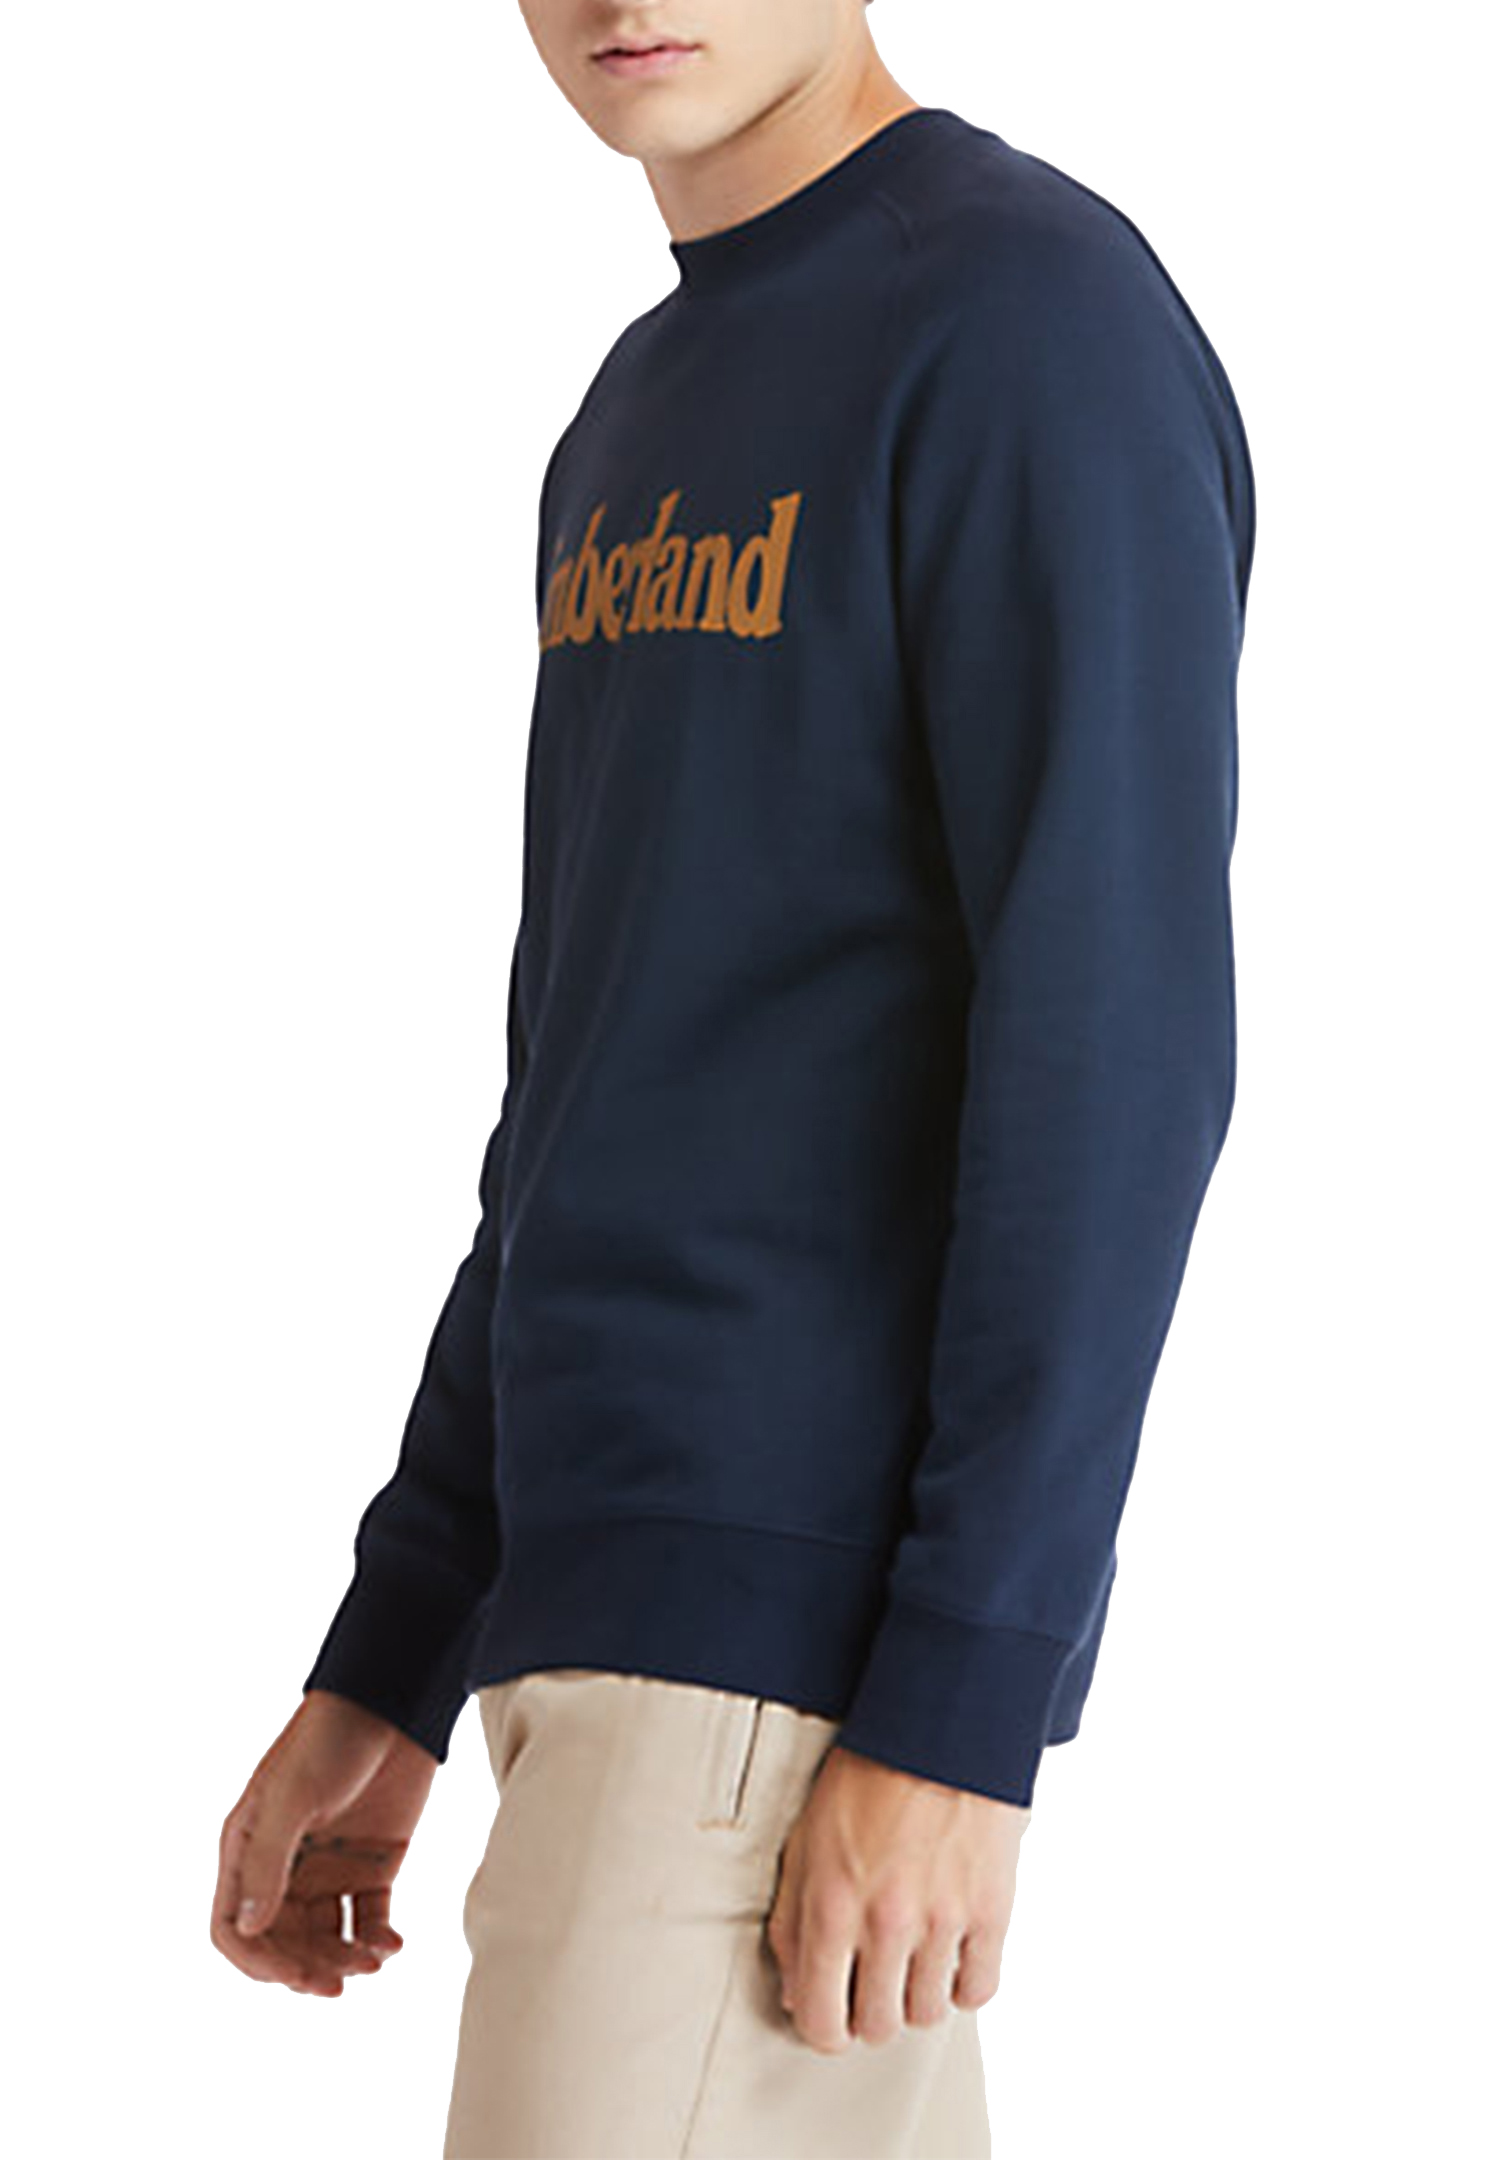 Timberland OYSTER R BB CREW SWEAT Herren Sweatshirt Pullover TB0A2C6H blau